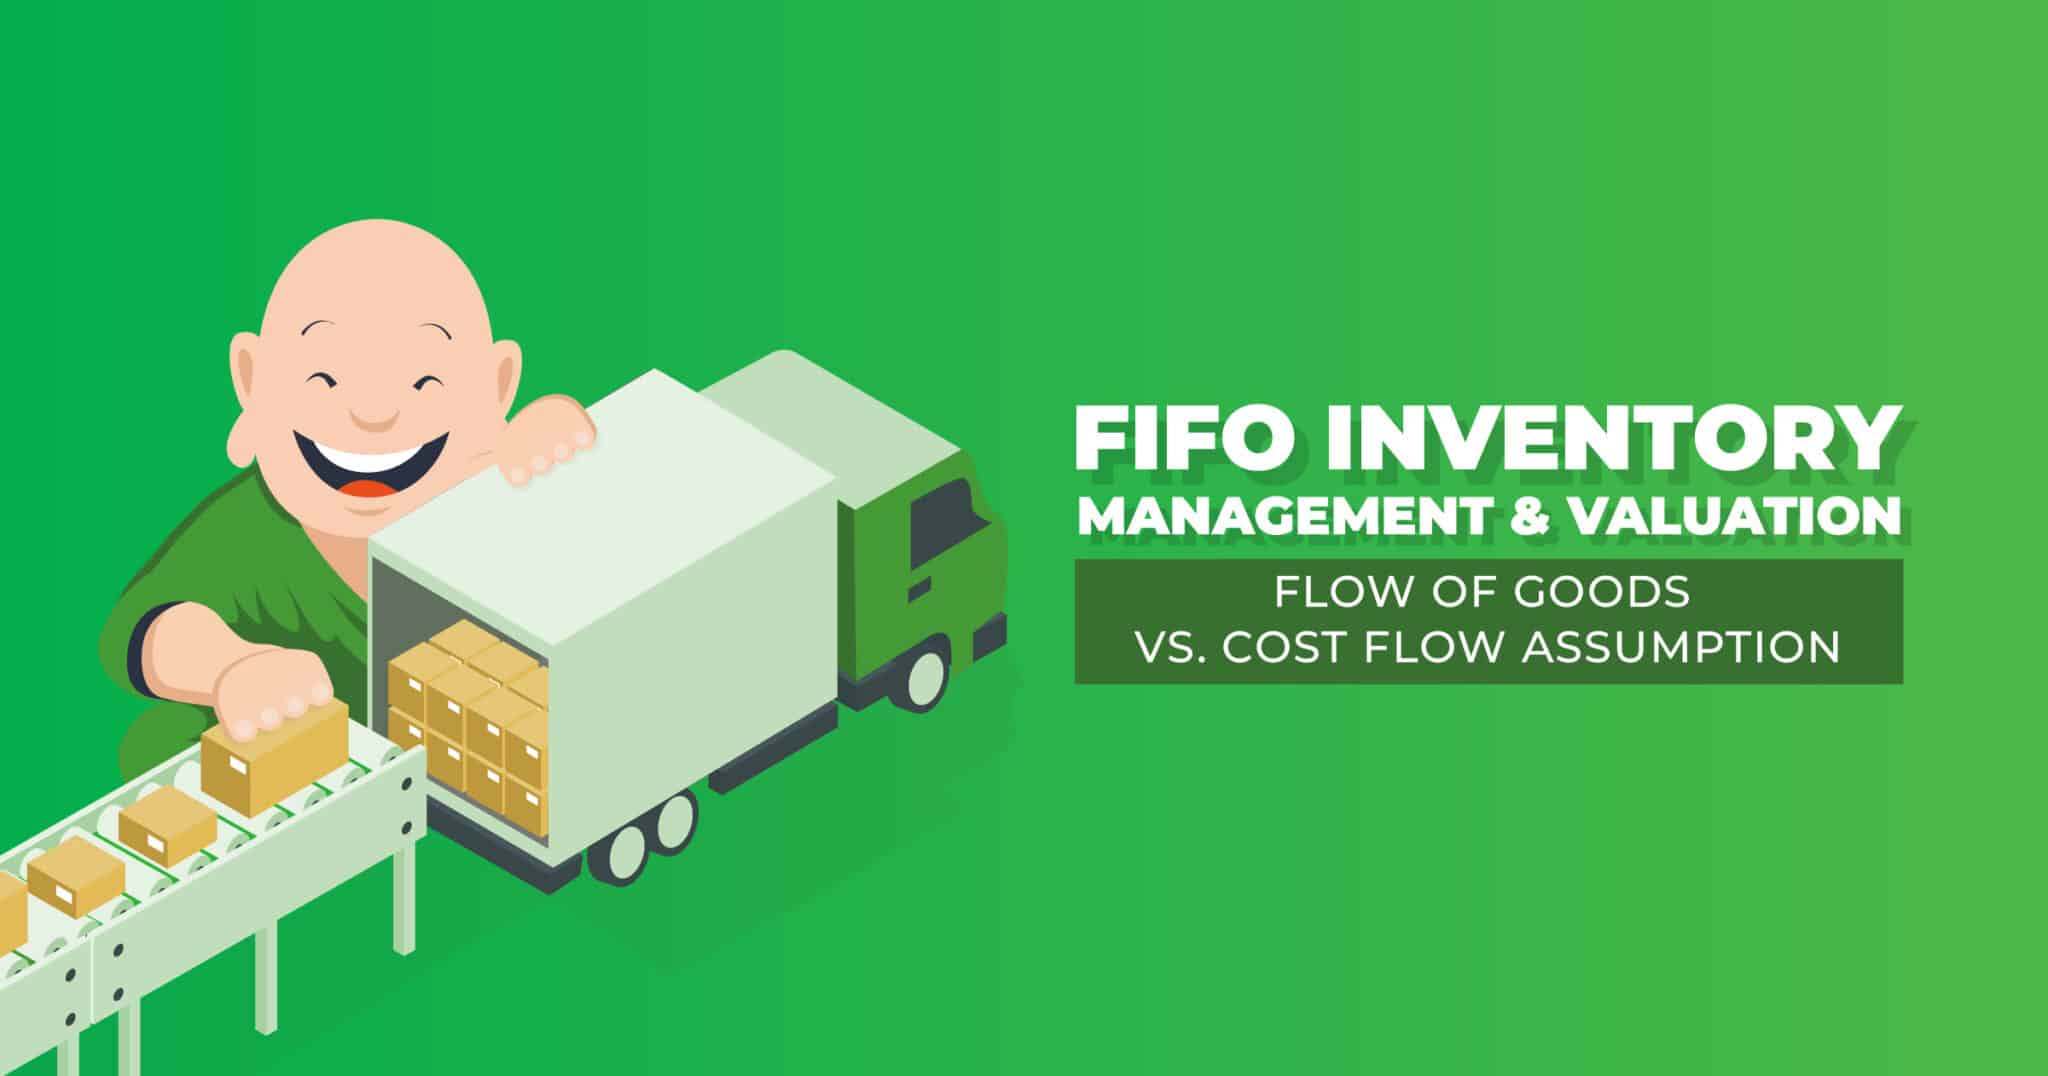 FIFO Inventory Management